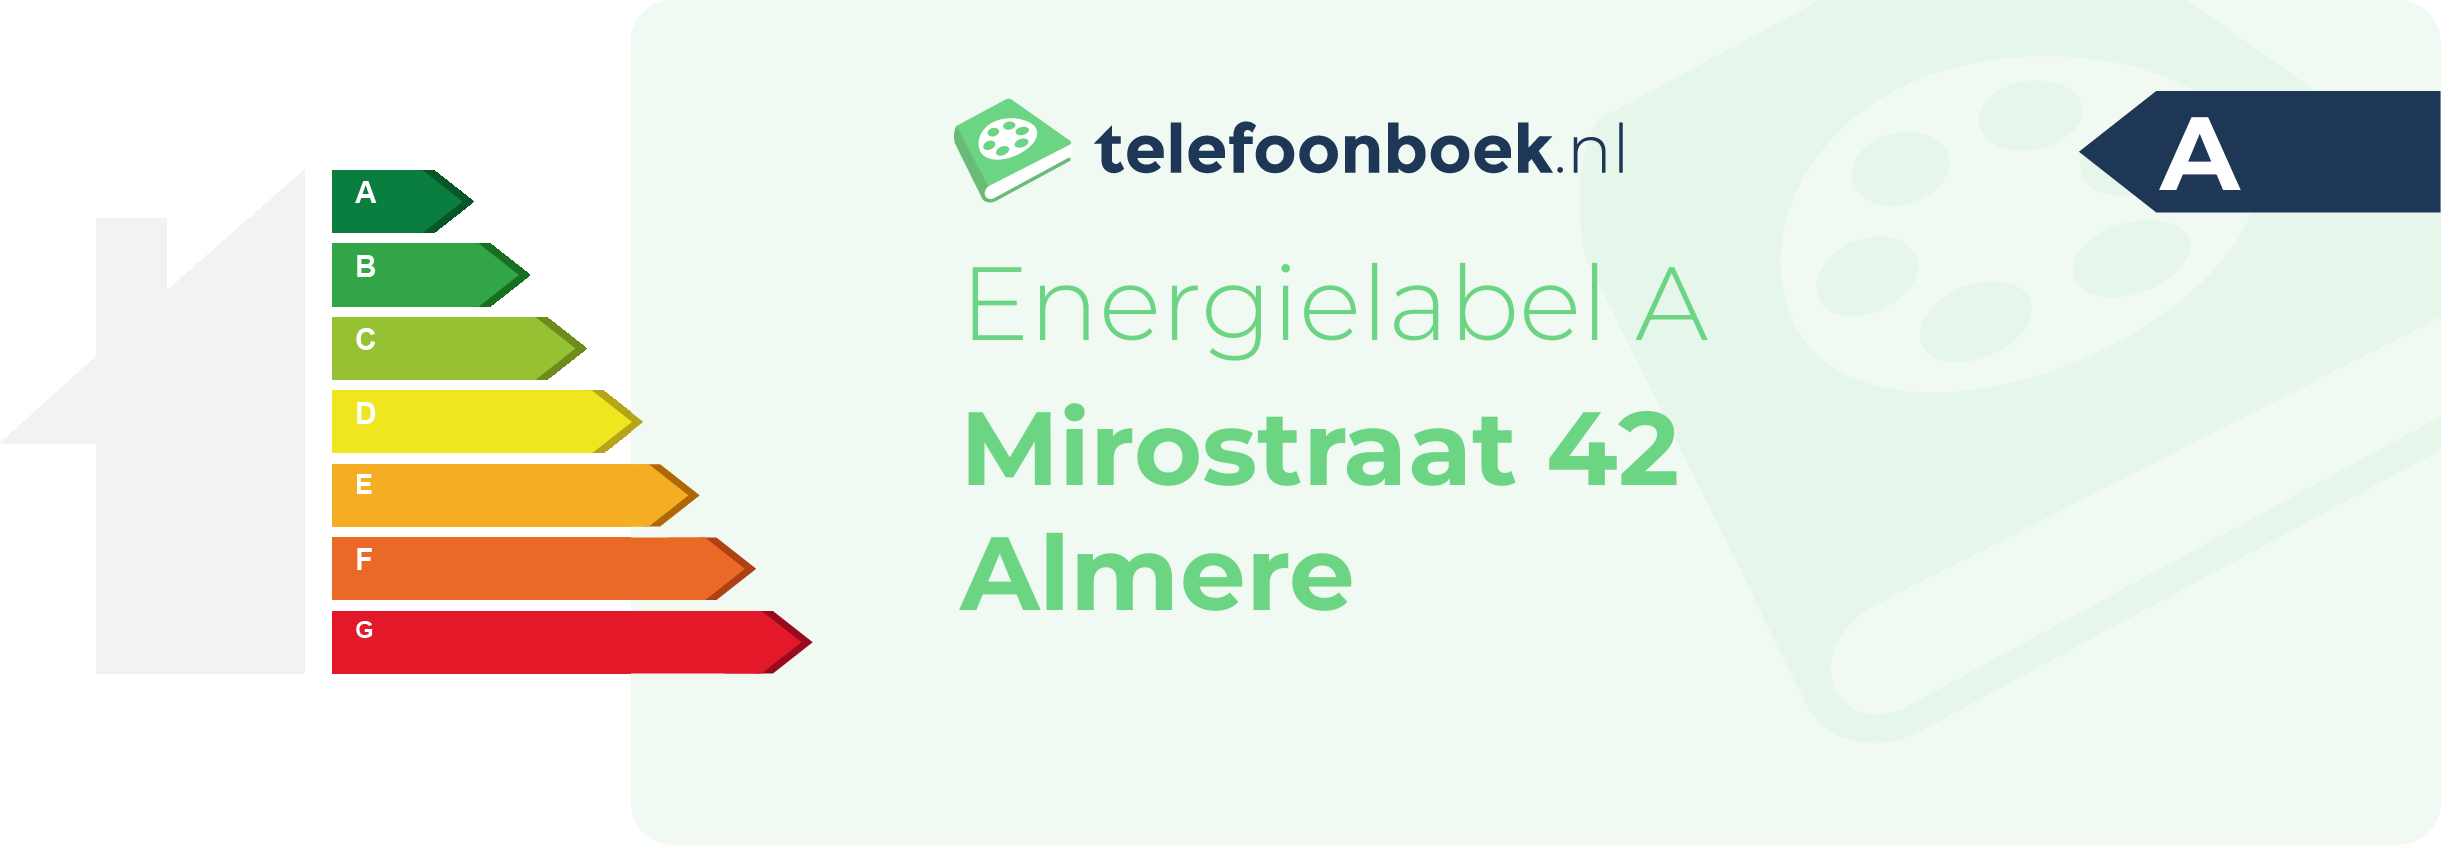 Energielabel Mirostraat 42 Almere